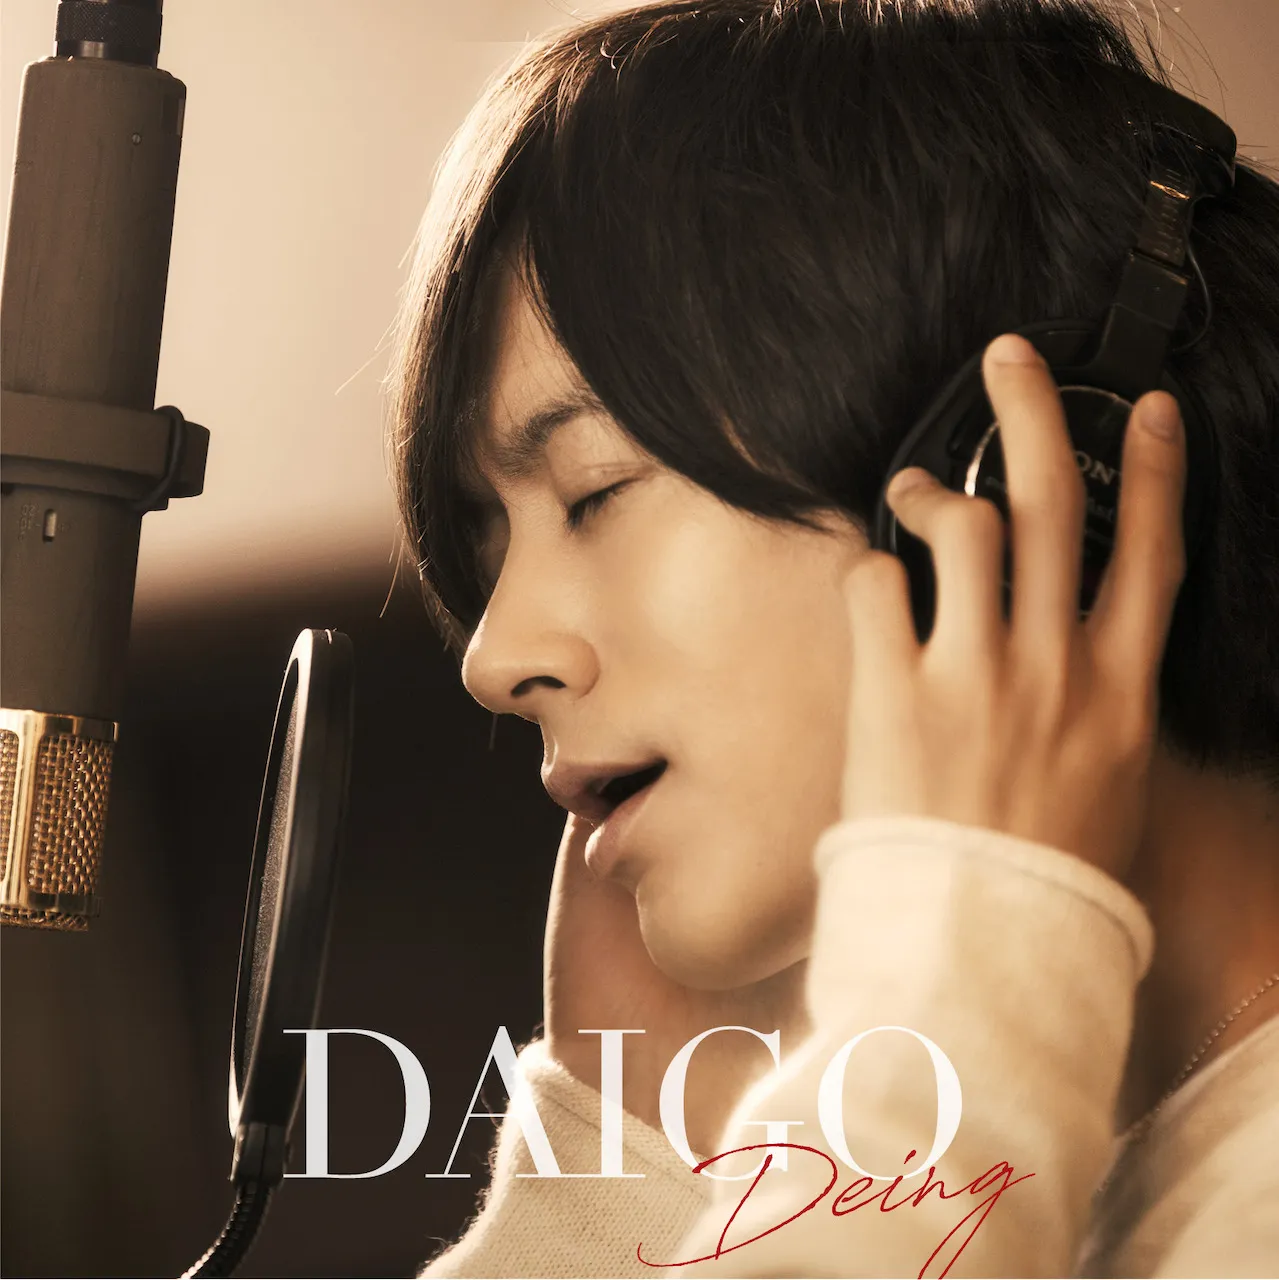 DAIGO『Deing』の初回限定盤A(CD+DVD)のジャケット写真